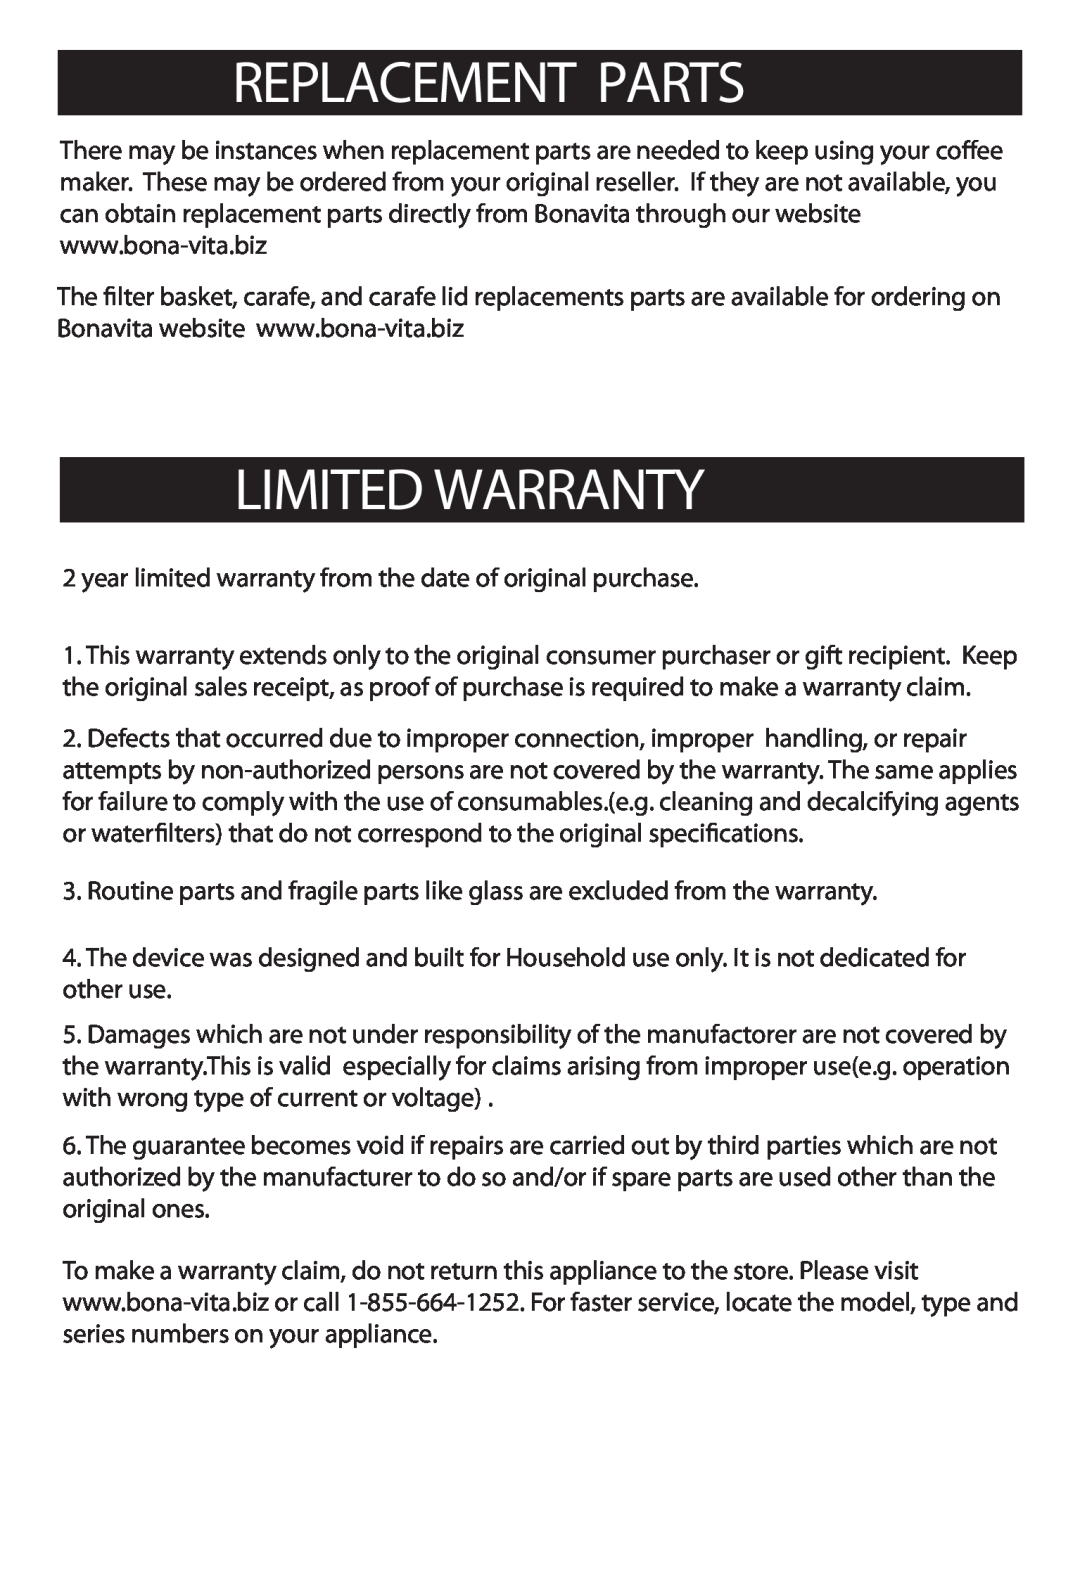 Bonavita BV1800 warranty Replacement Parts, Limited Warranty 